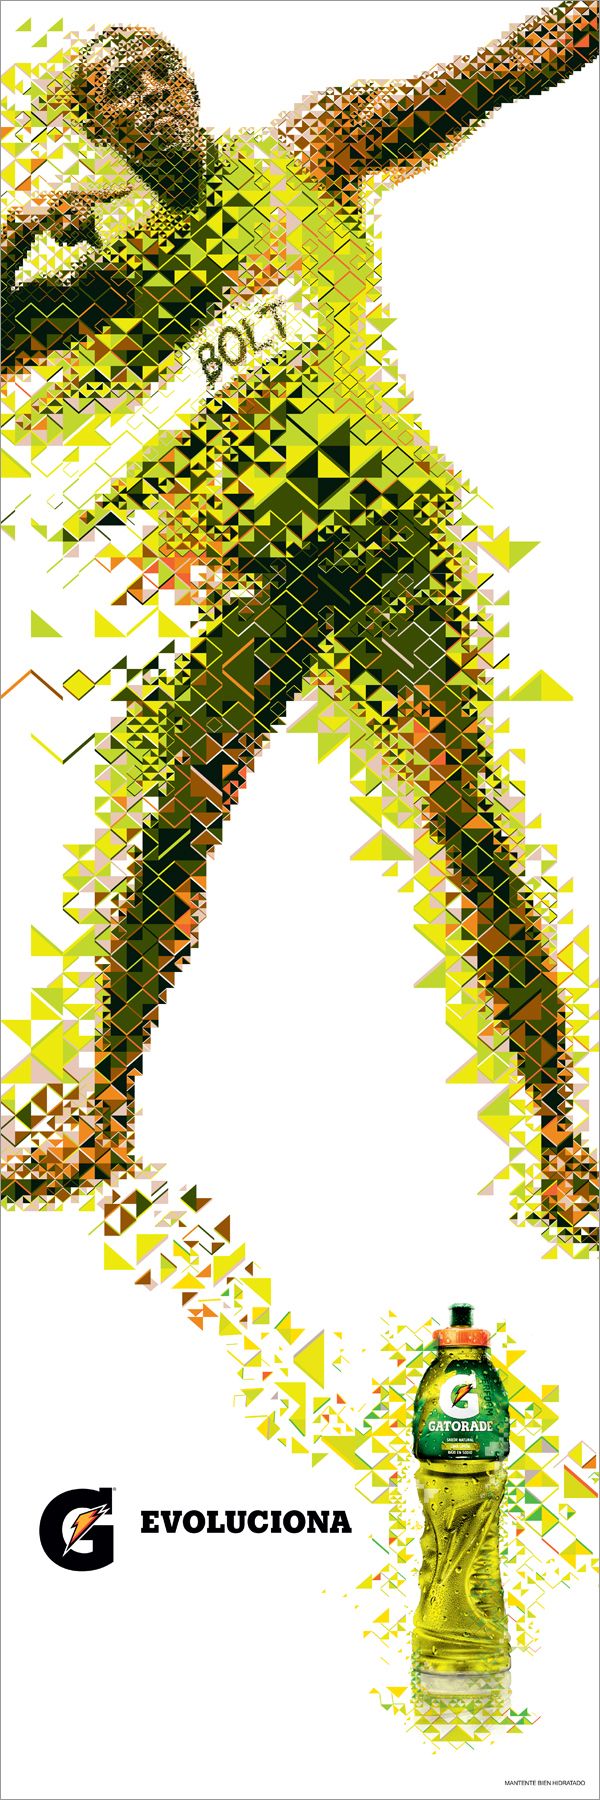 1549525488_183_Advertising-Campaign-Gatorade-Evoluciona-New-Line-3-Series-campaigns-by-Charis-Tsevis-via-Behance Advertising Campaign : Gatorade Evoluciona & New Line 3 Series campaigns by Charis Tsevis, via Behance